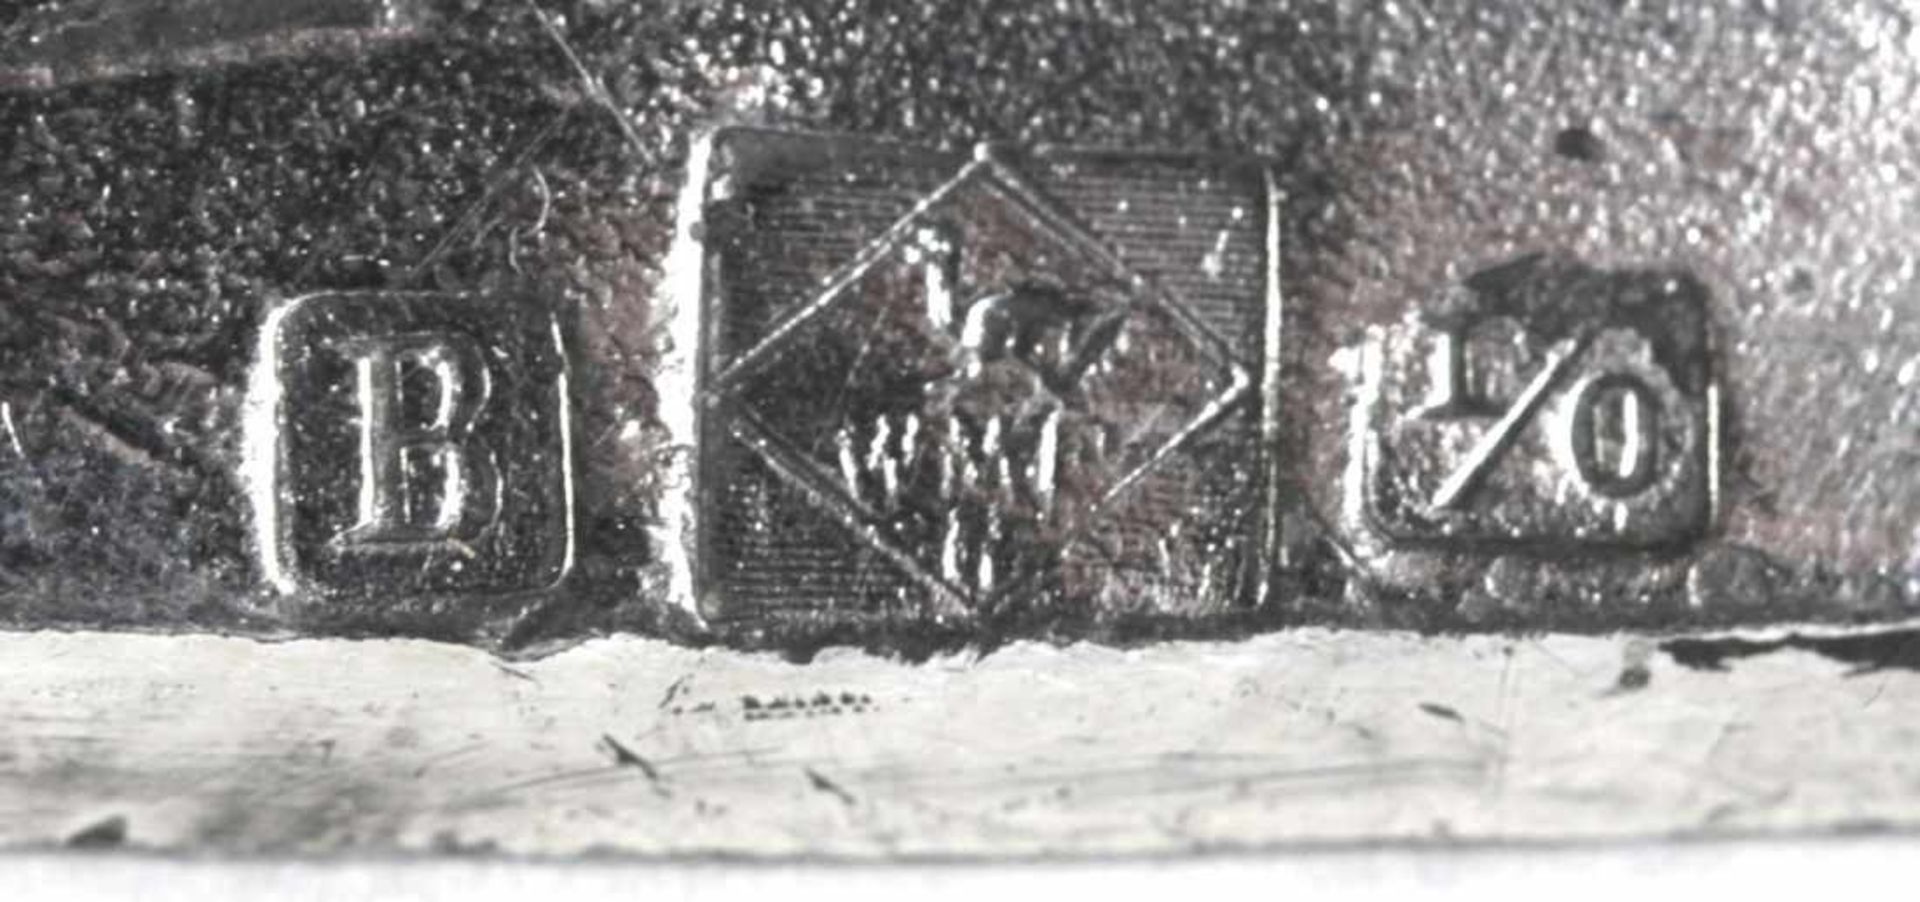 Britanniametall-Tafelleuchter, 2-flg., WMF, Geislingen, um 1906, Mod.nr. 192,vierseitiger, - Bild 2 aus 3